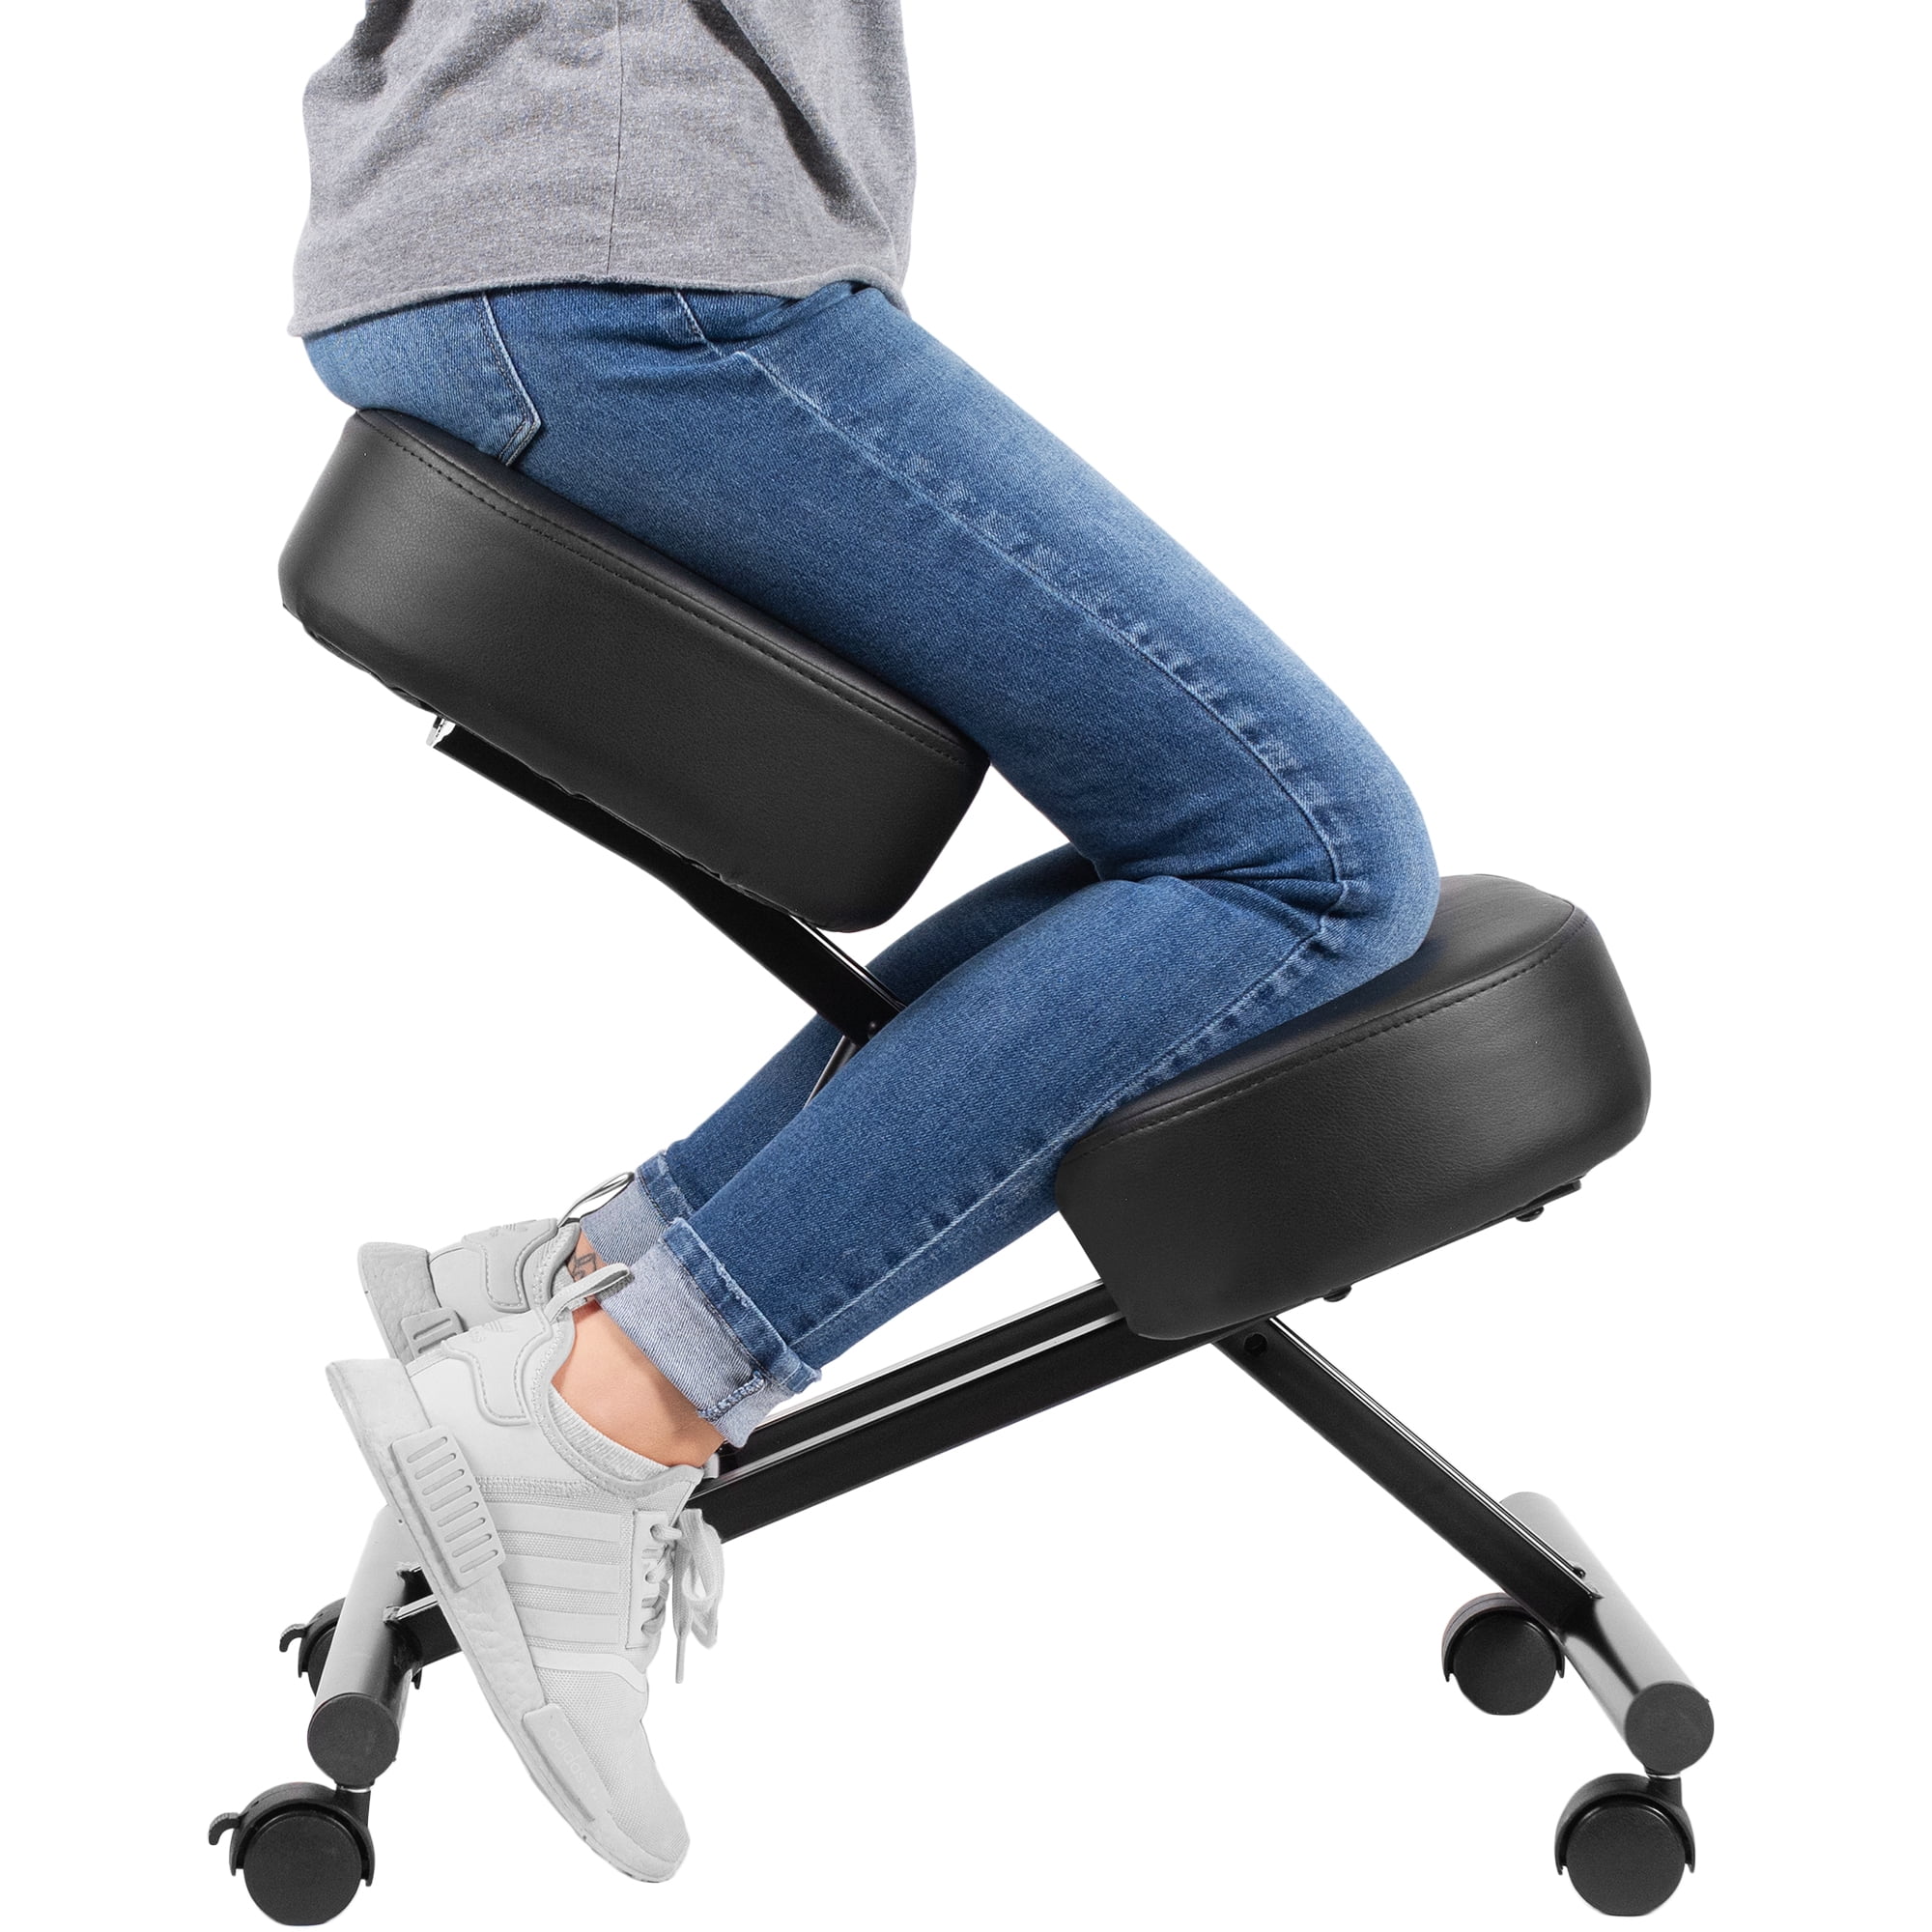 DRAGONN (By VIVO) Ergonomic Kneeling Chair for Home and Office, Black ...